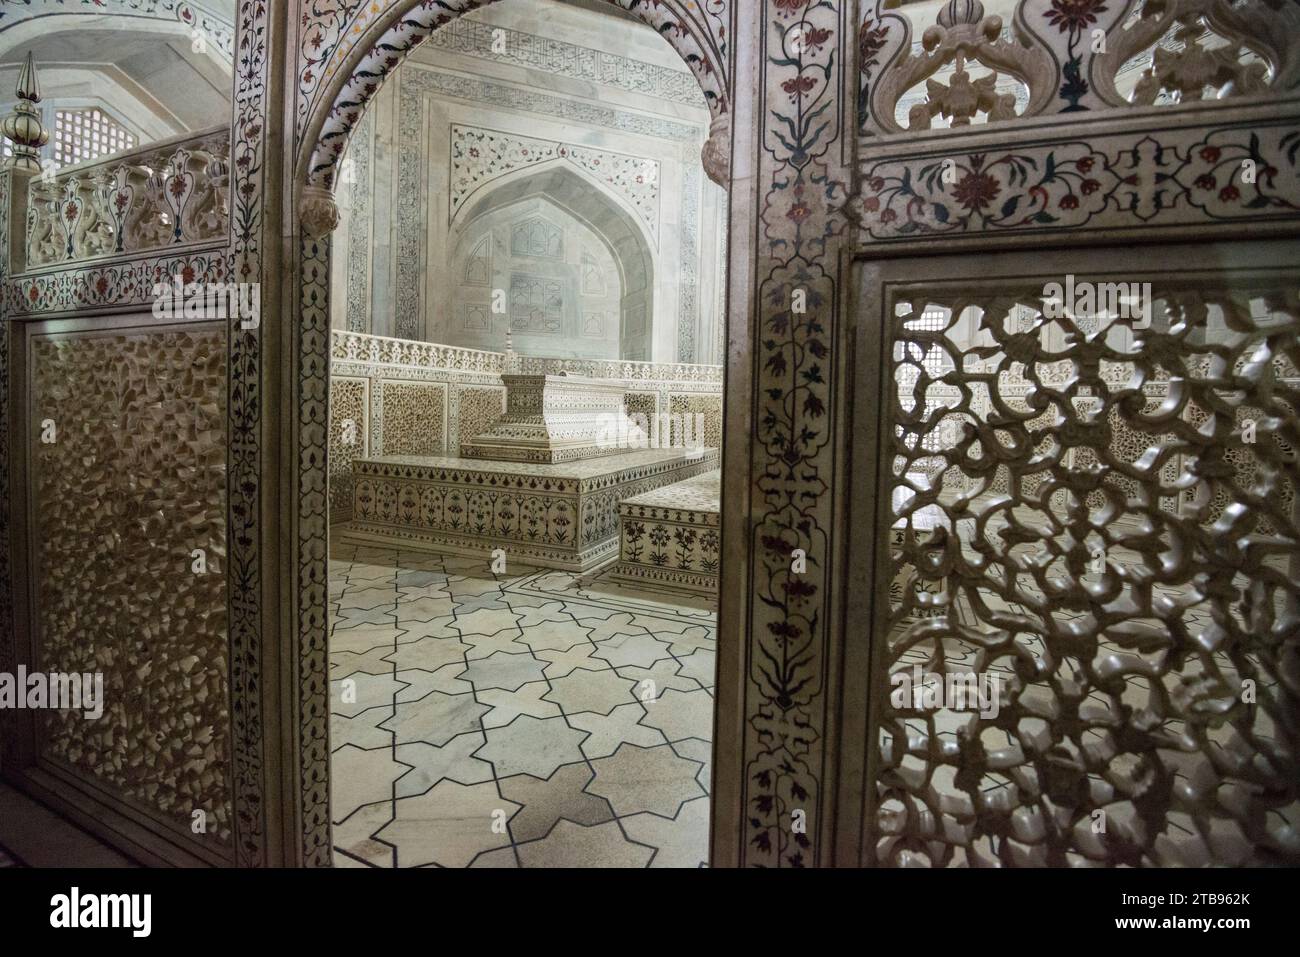 Tomb of Mumtaz Mahal in the tomb room of the Taj Mahal; Agra, India Stock Photo